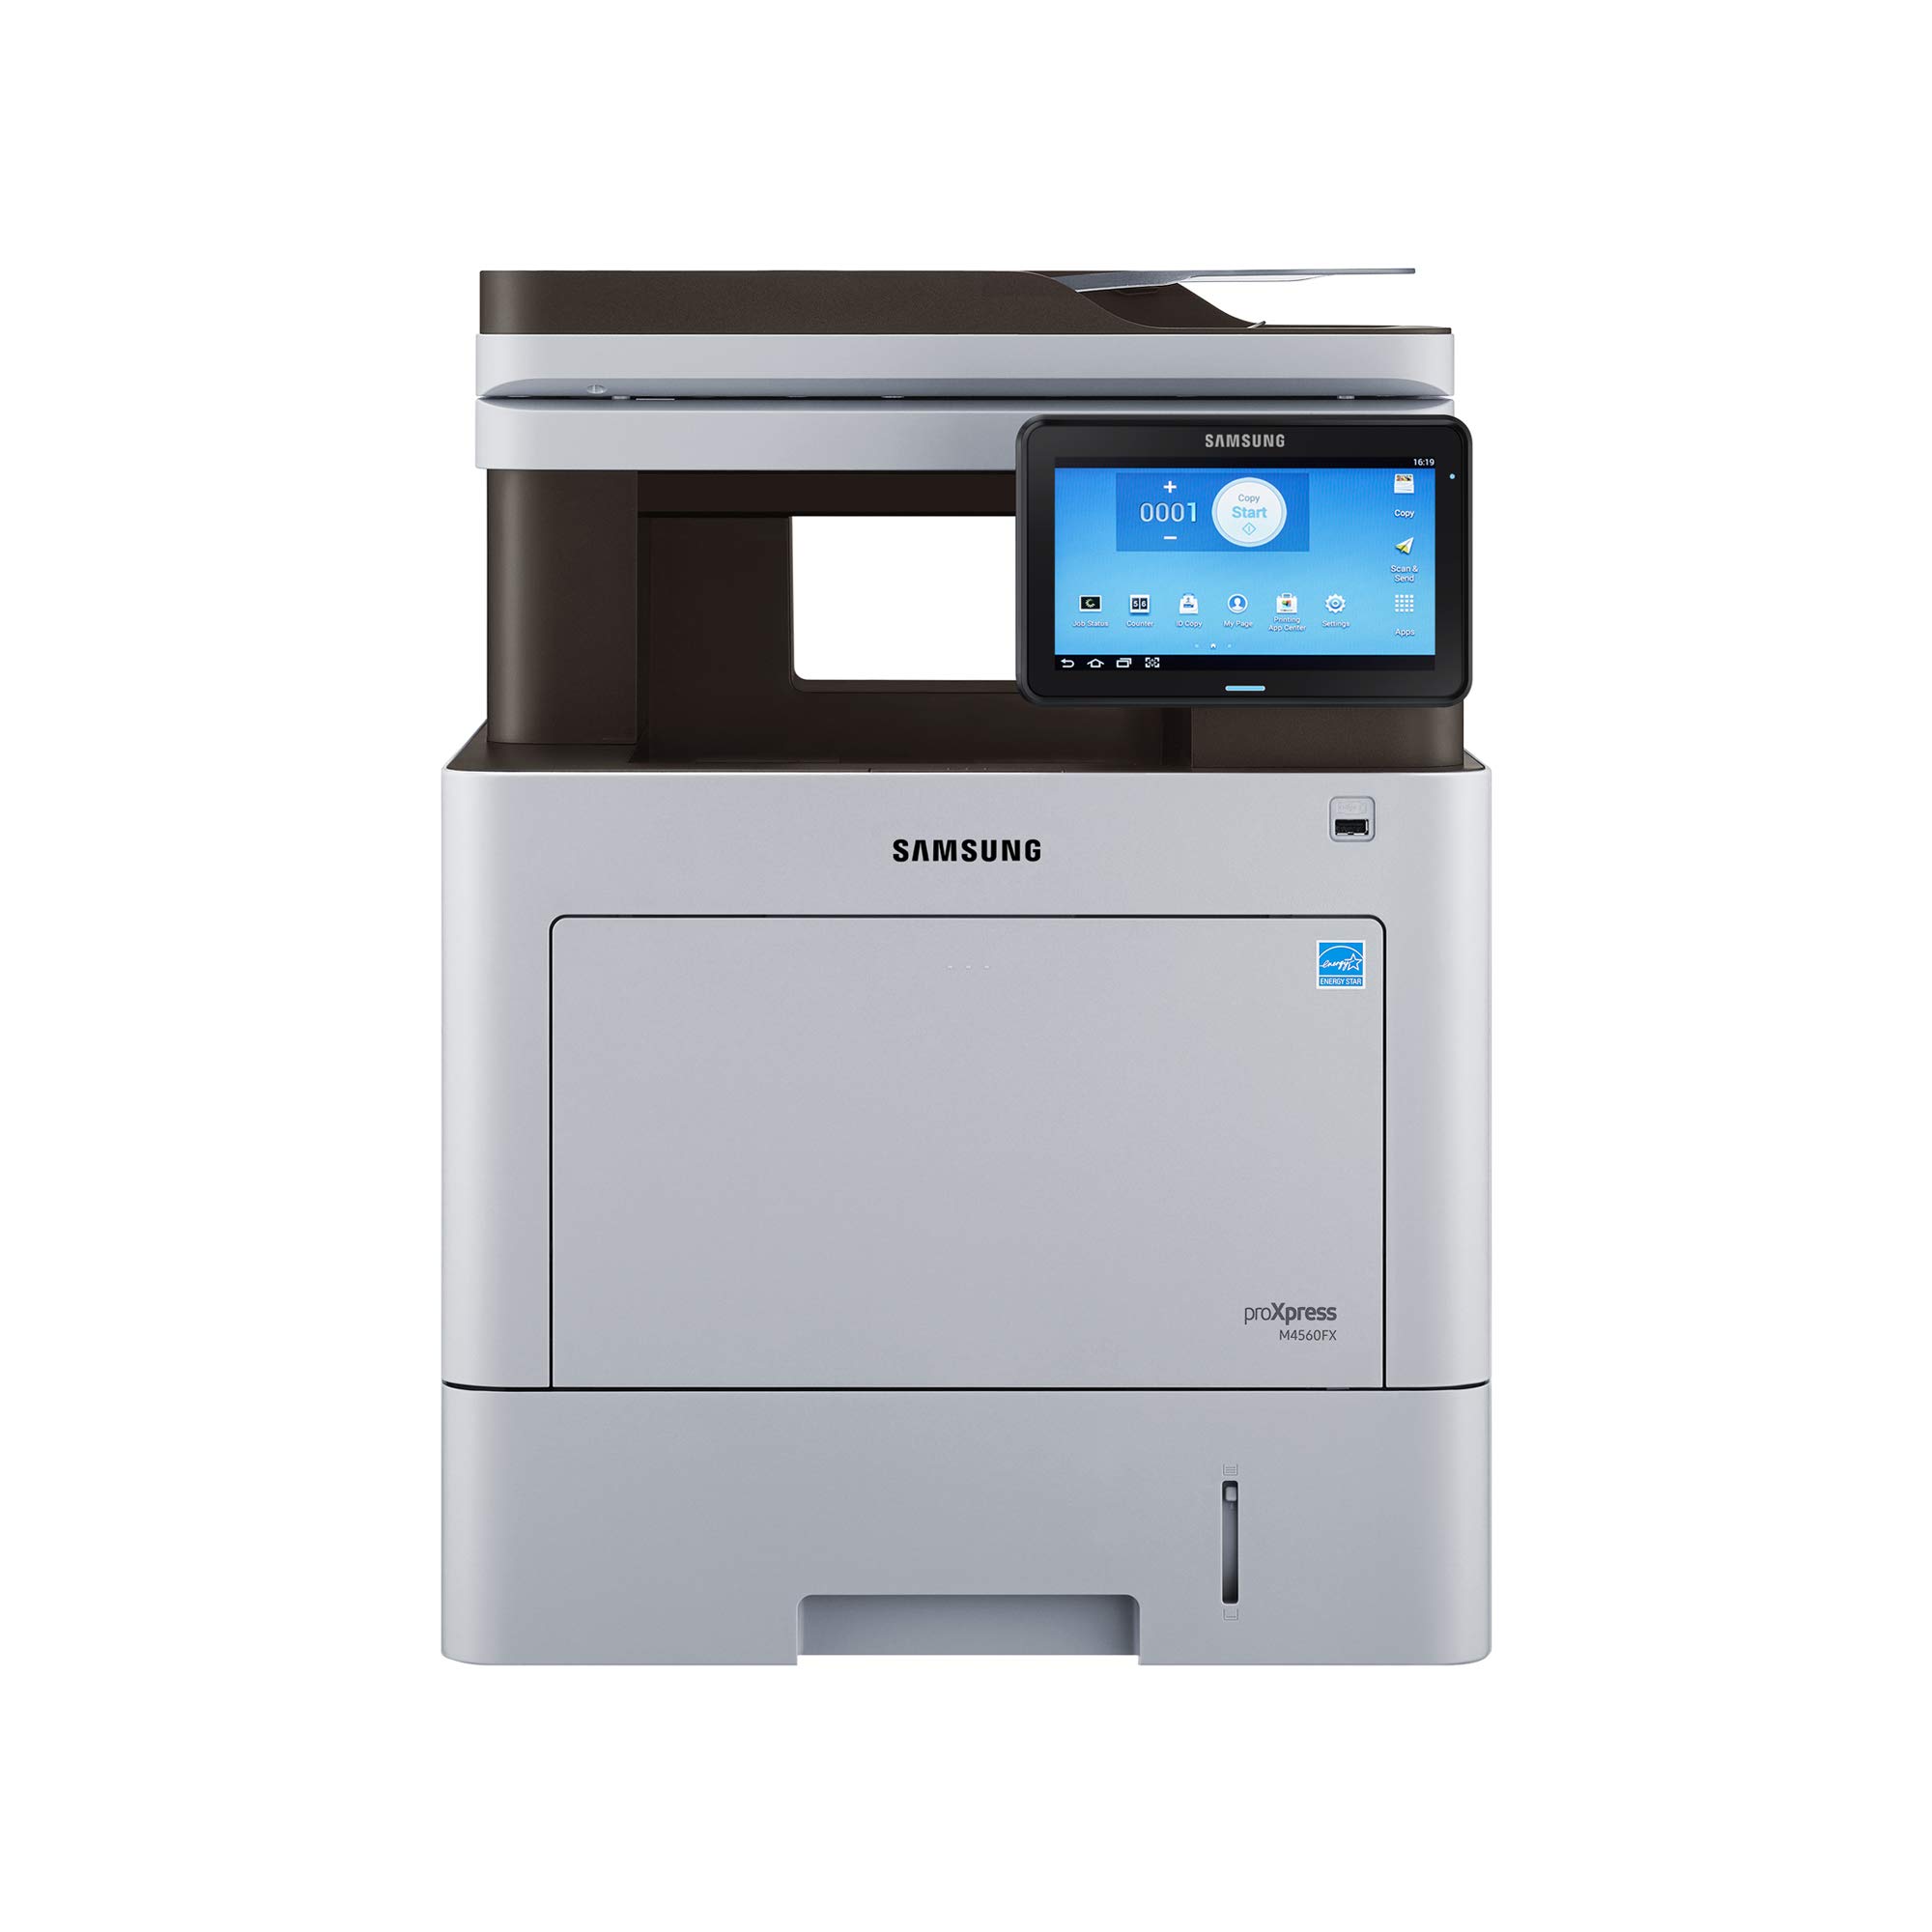 Samsung ProXpress SL-M4075 Laser Multifunction Printer series